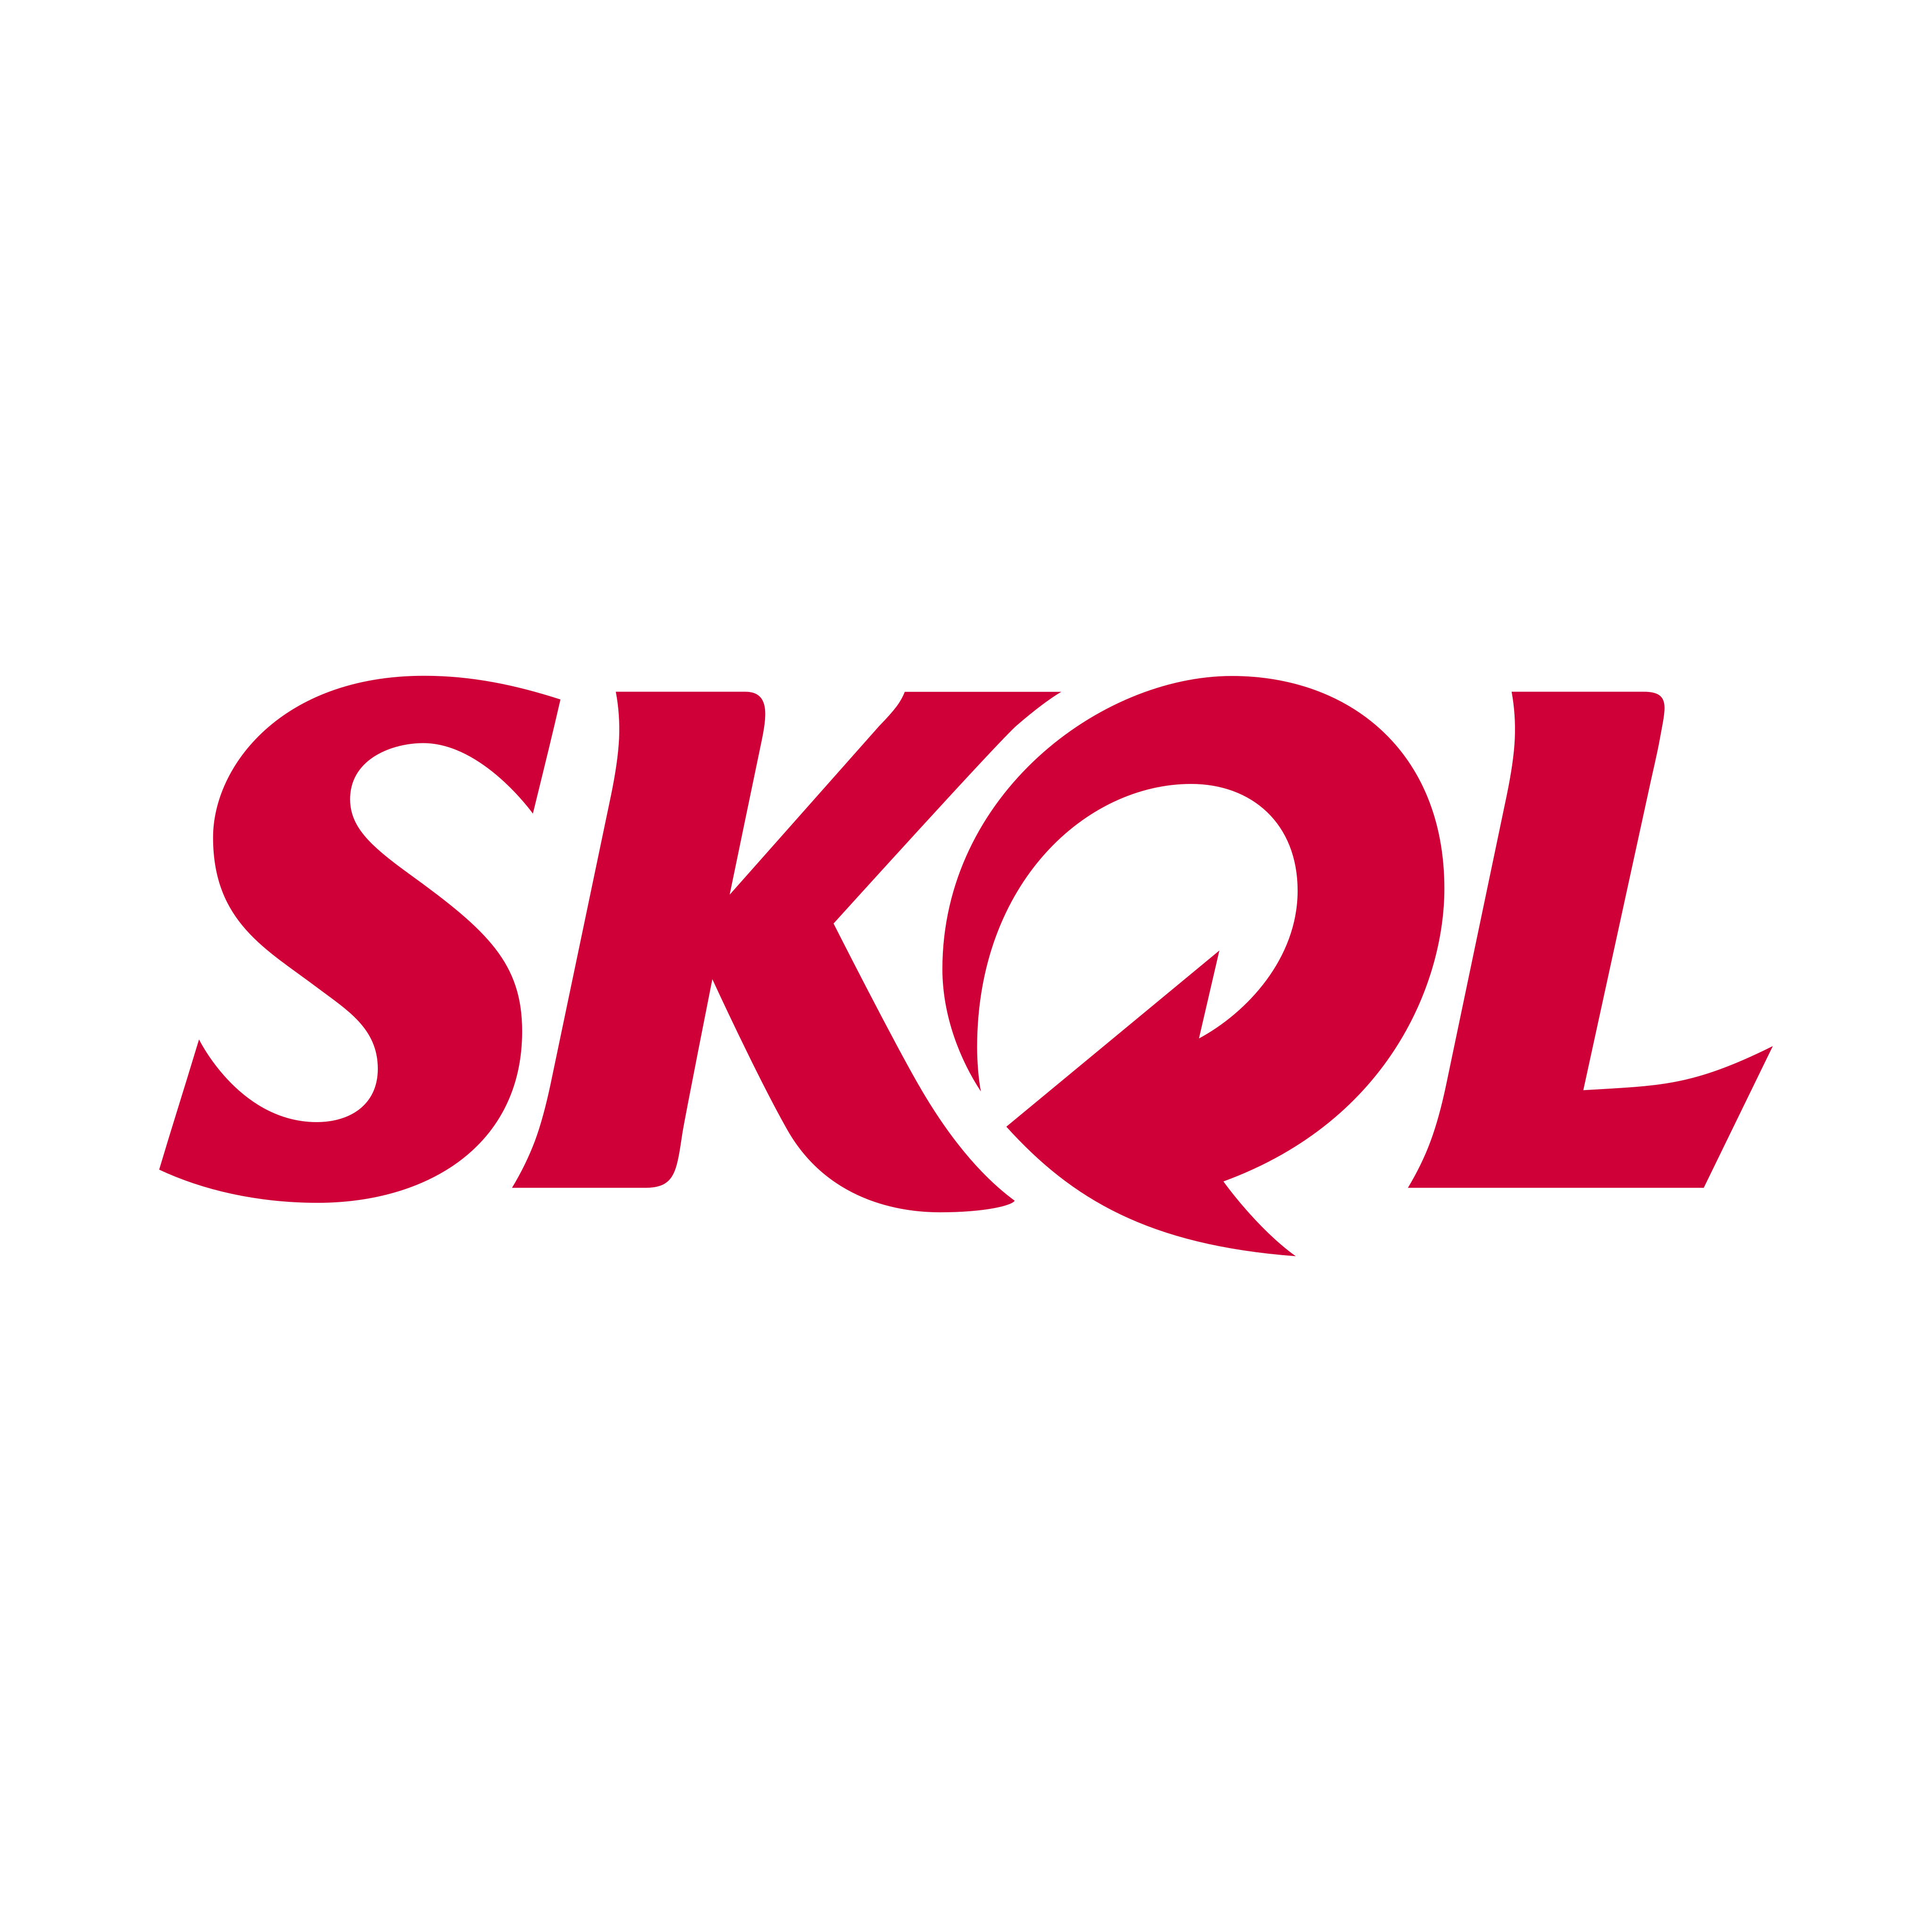 SKOL logo PNG.